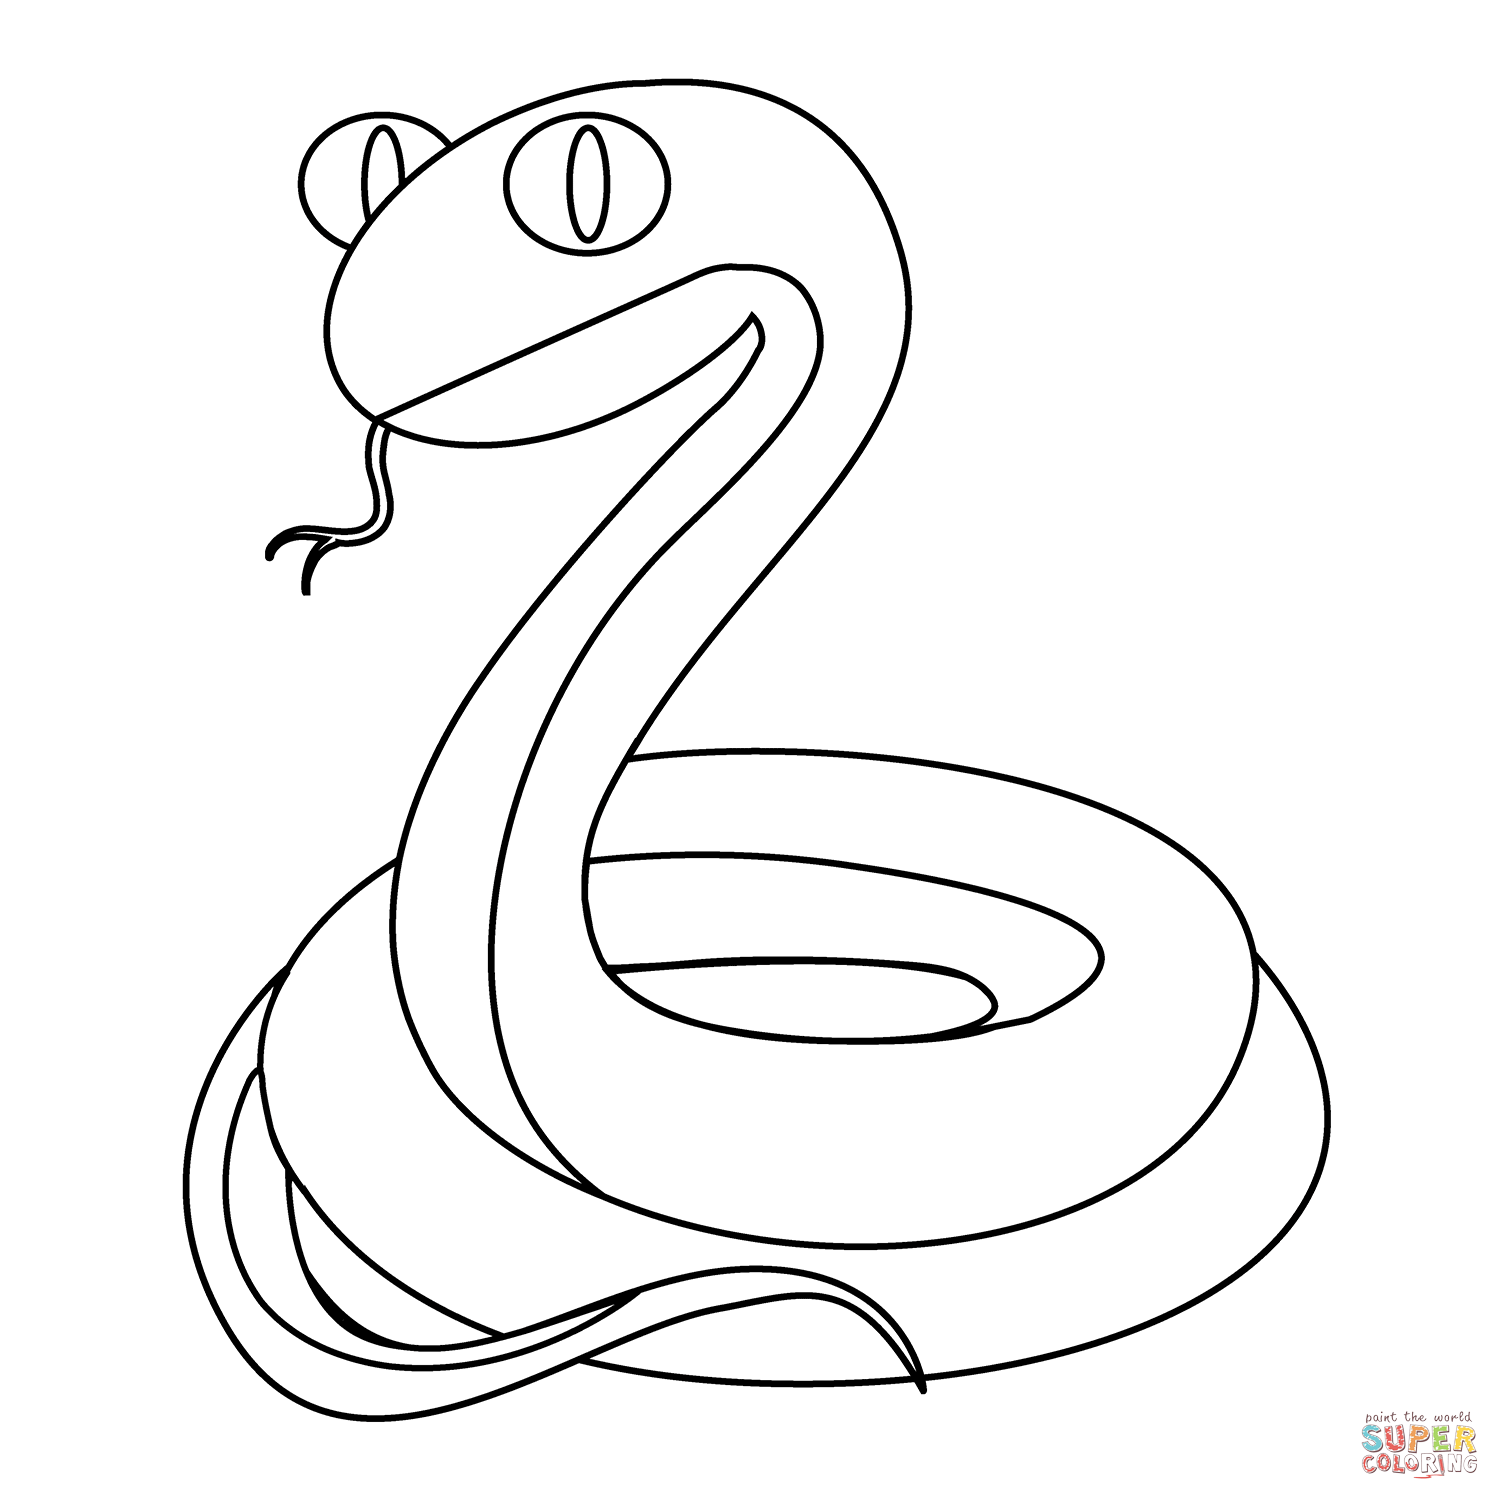 Snake emoji coloring page free printable coloring pages